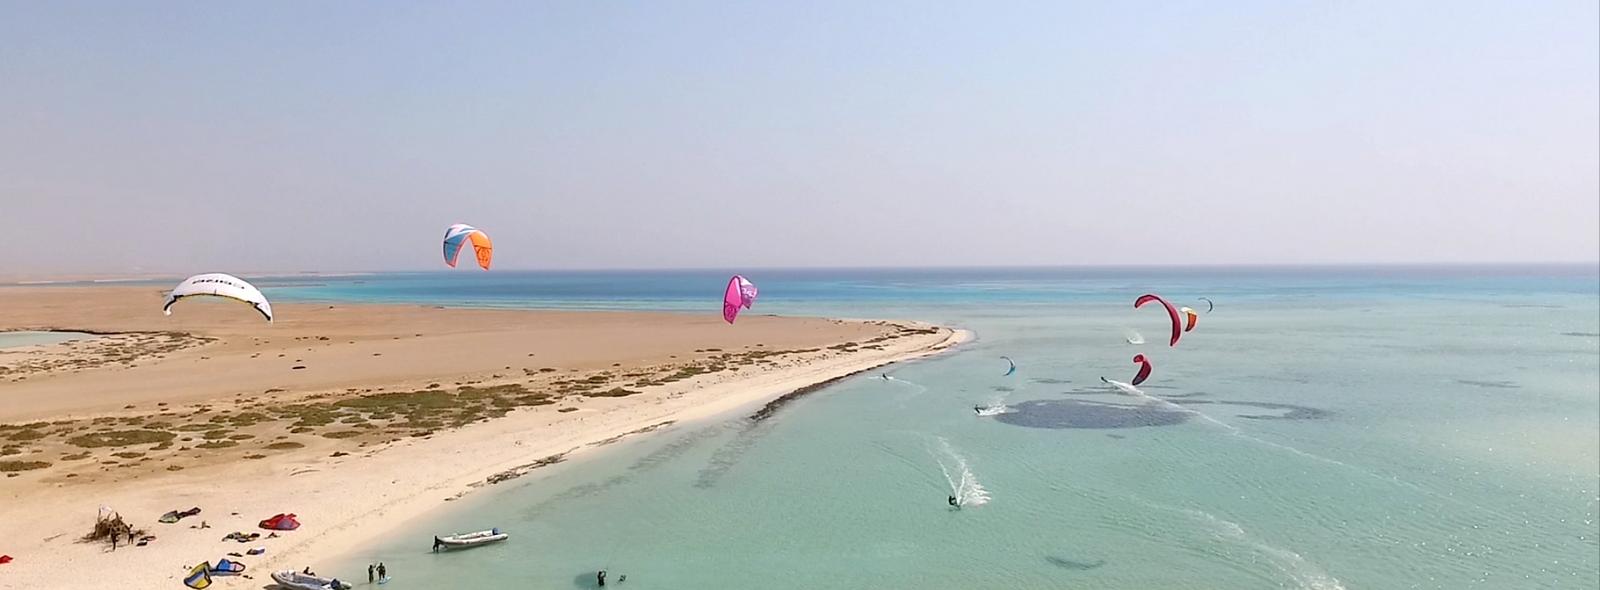 Venez kiter à El Gouna en Egypte 1